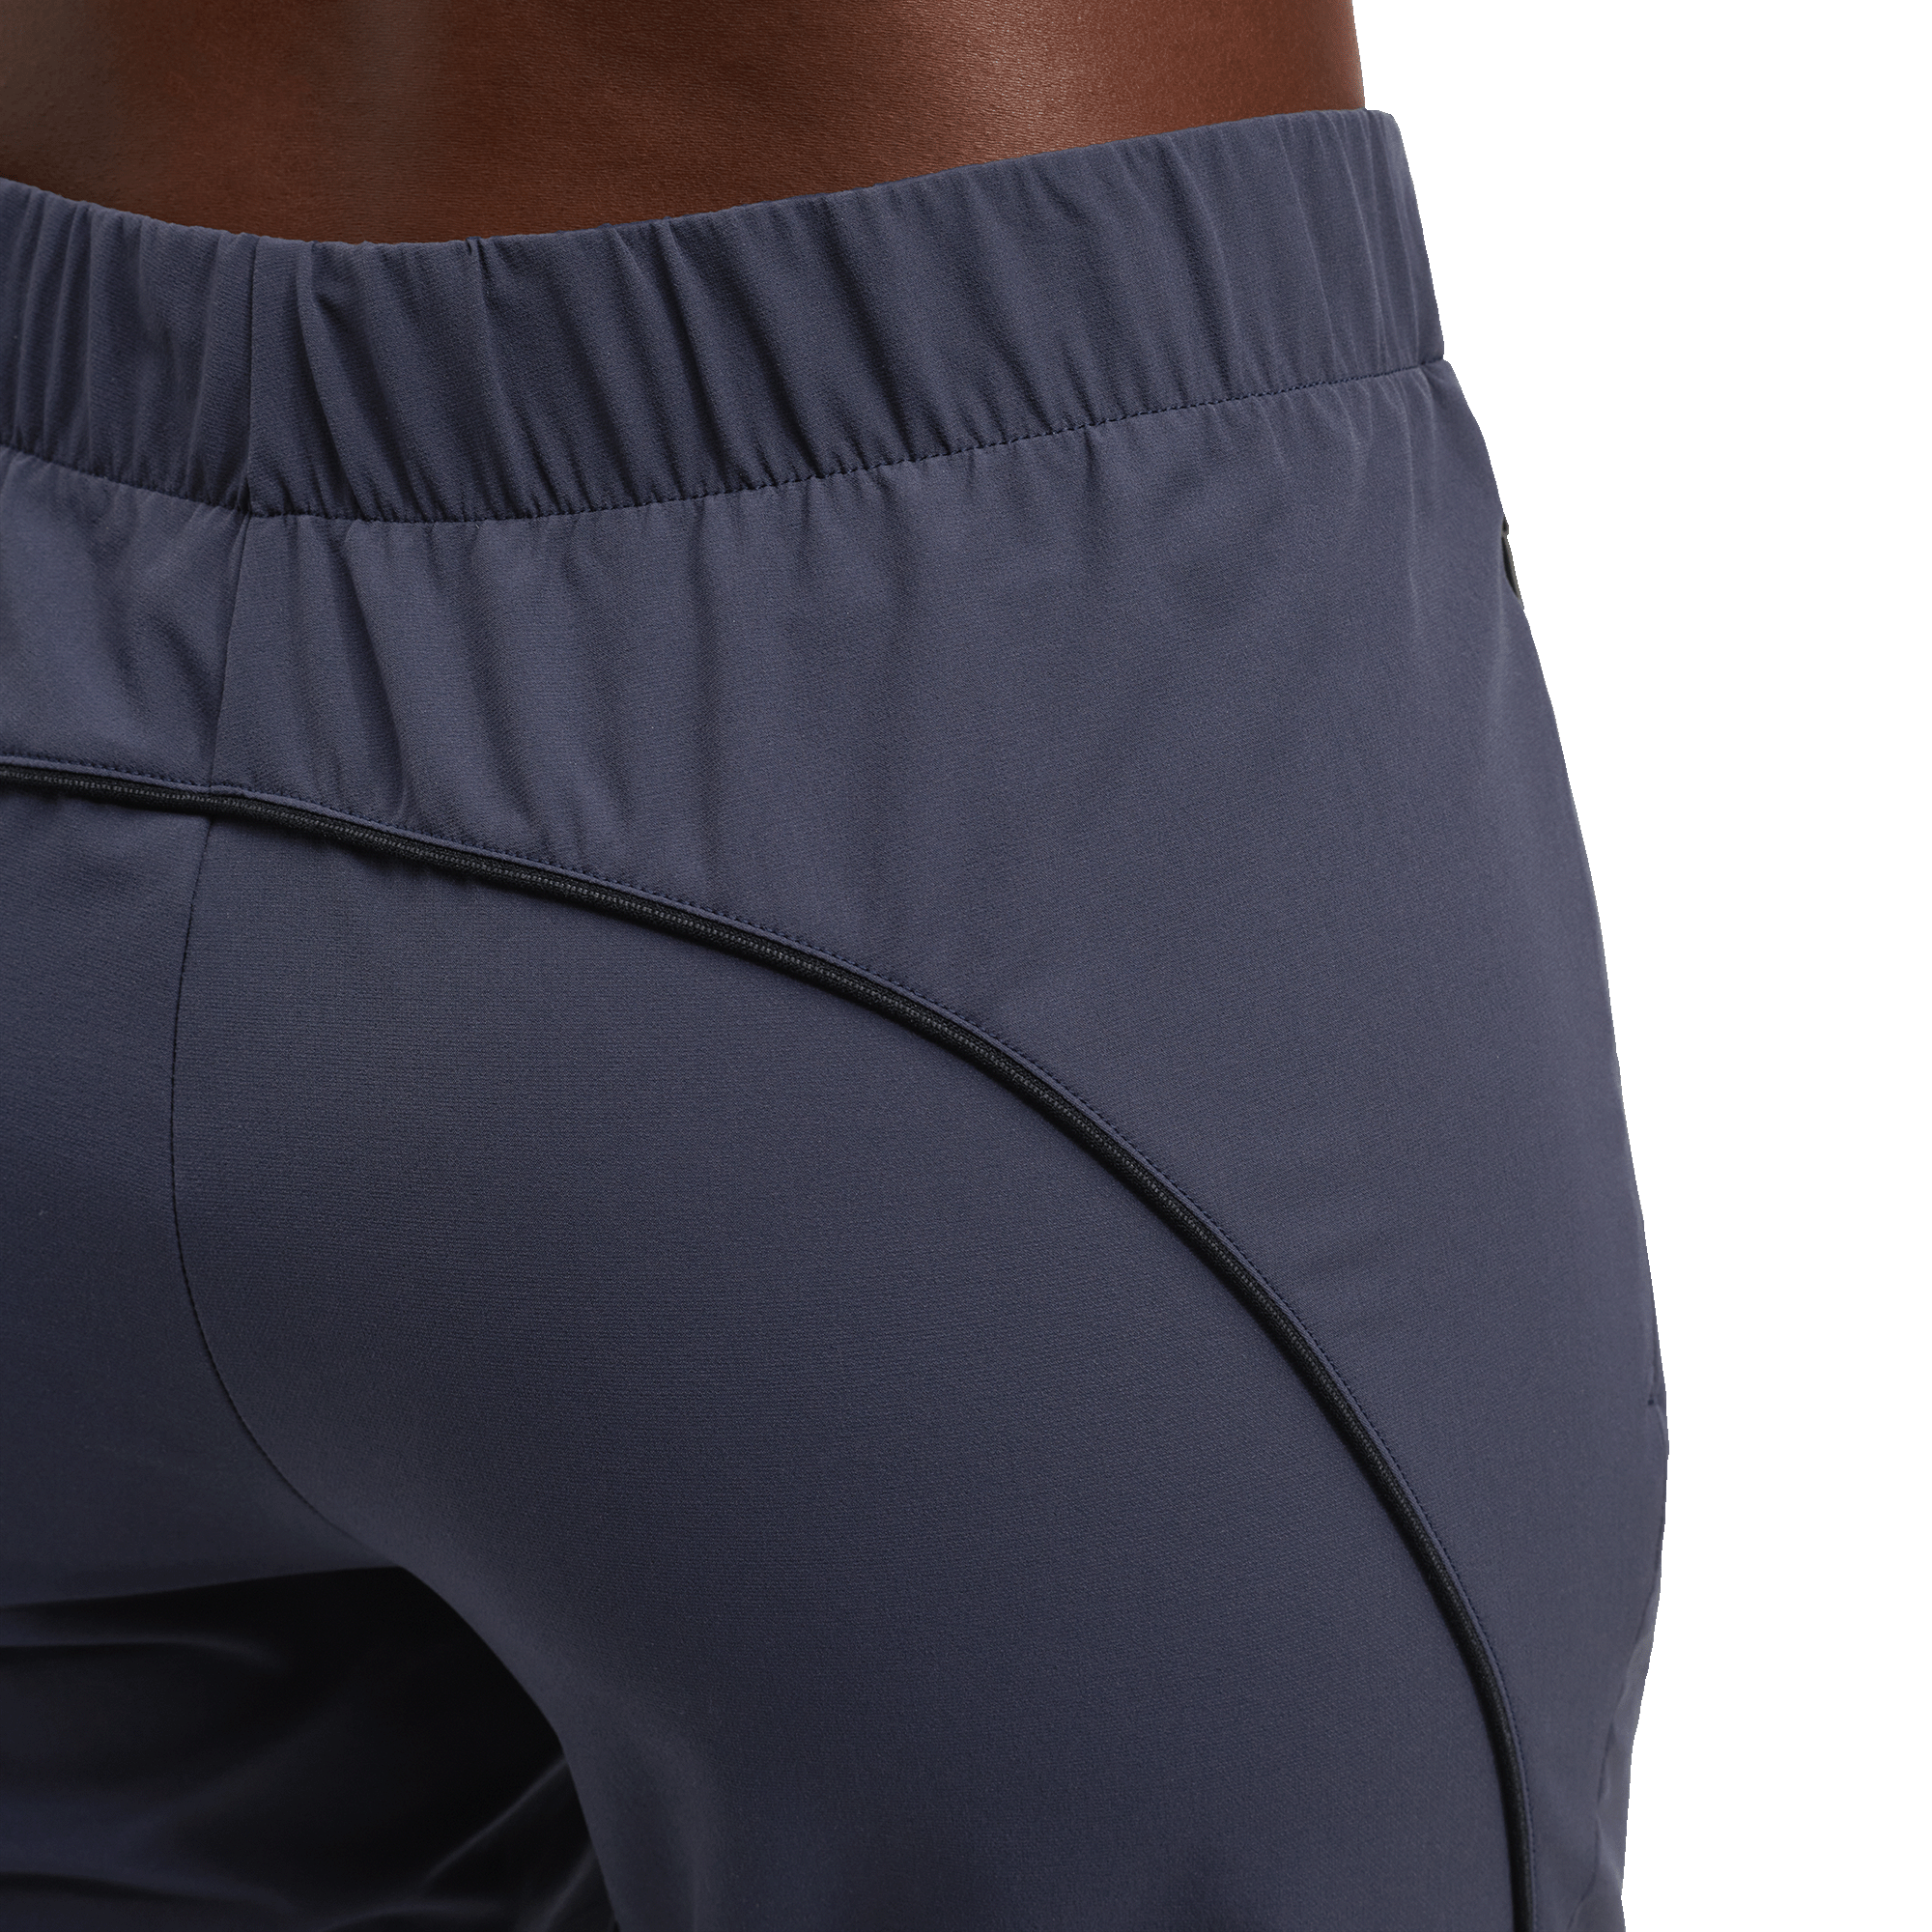 Xersion Women's Active Wear Pants Size Medium Gray on eBid United States